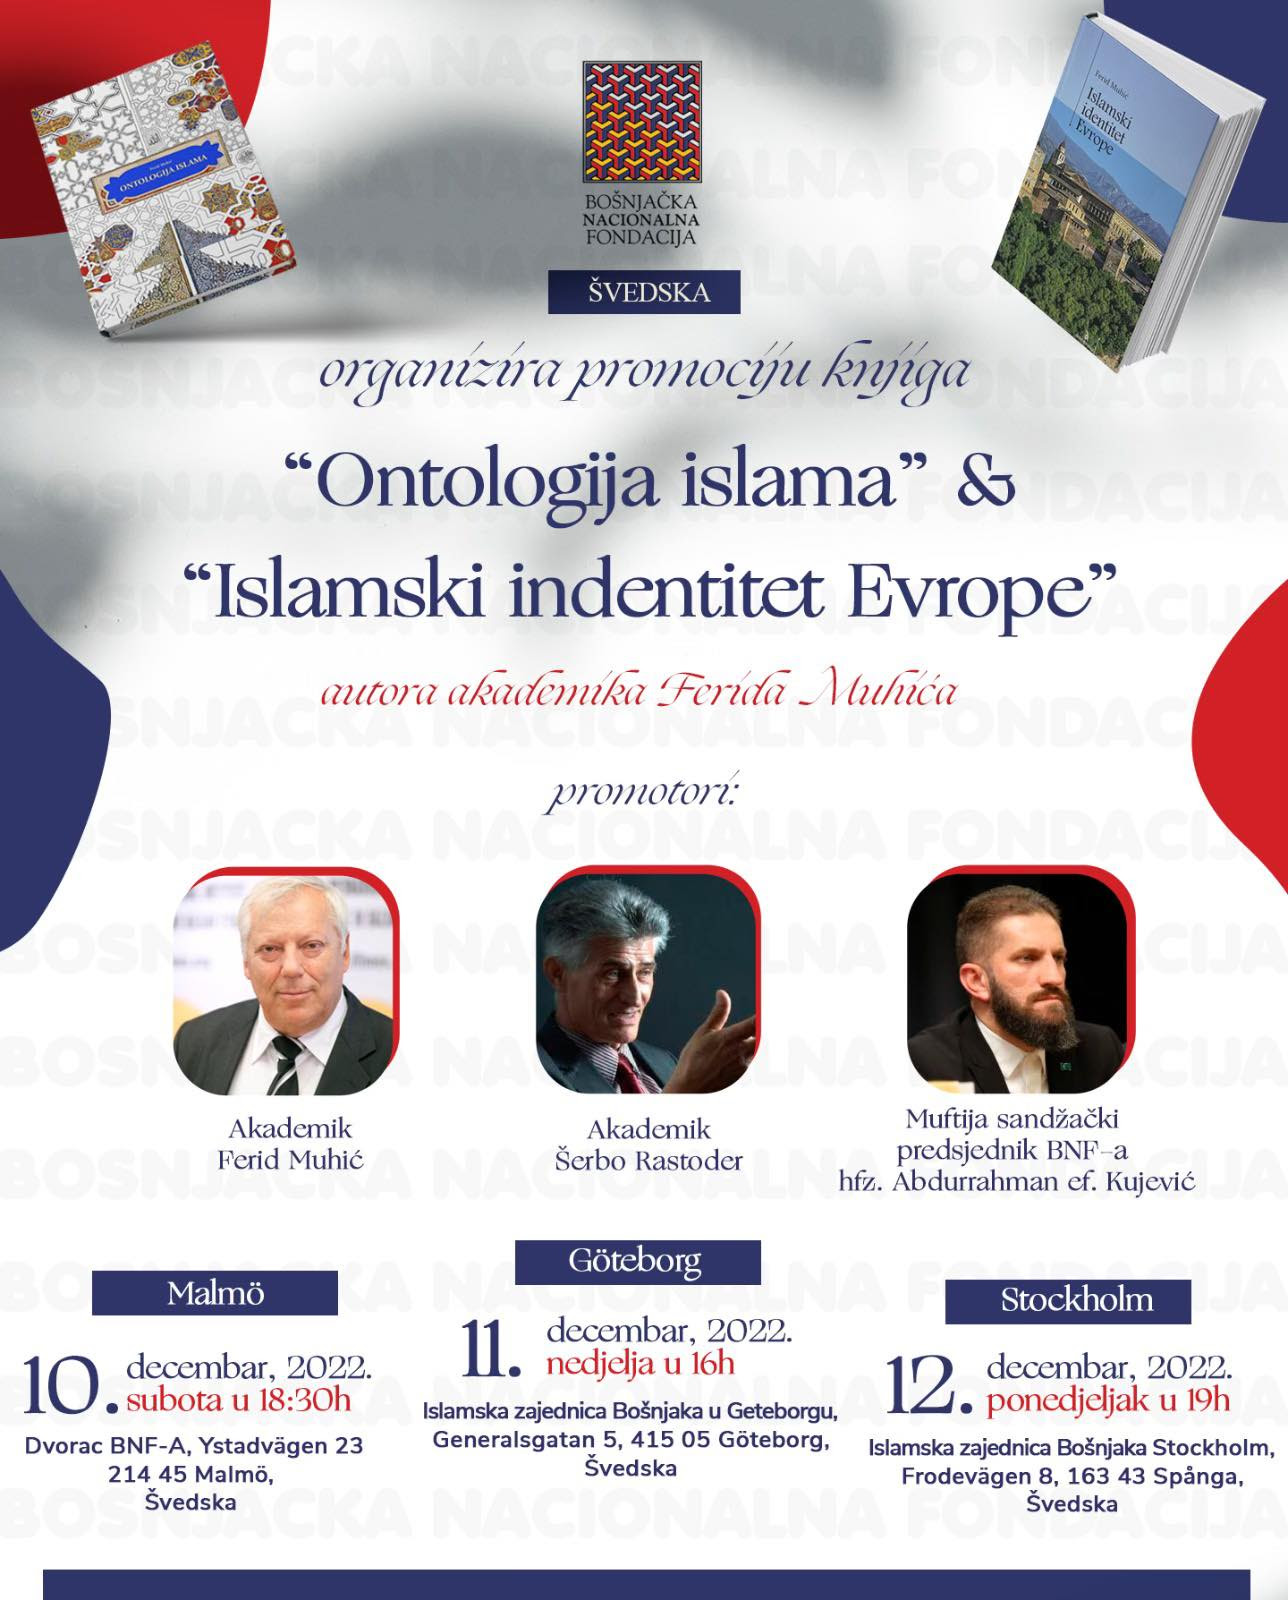 Promocija Knjige “Islamski identitet Evrope” i “Ontologija islama”